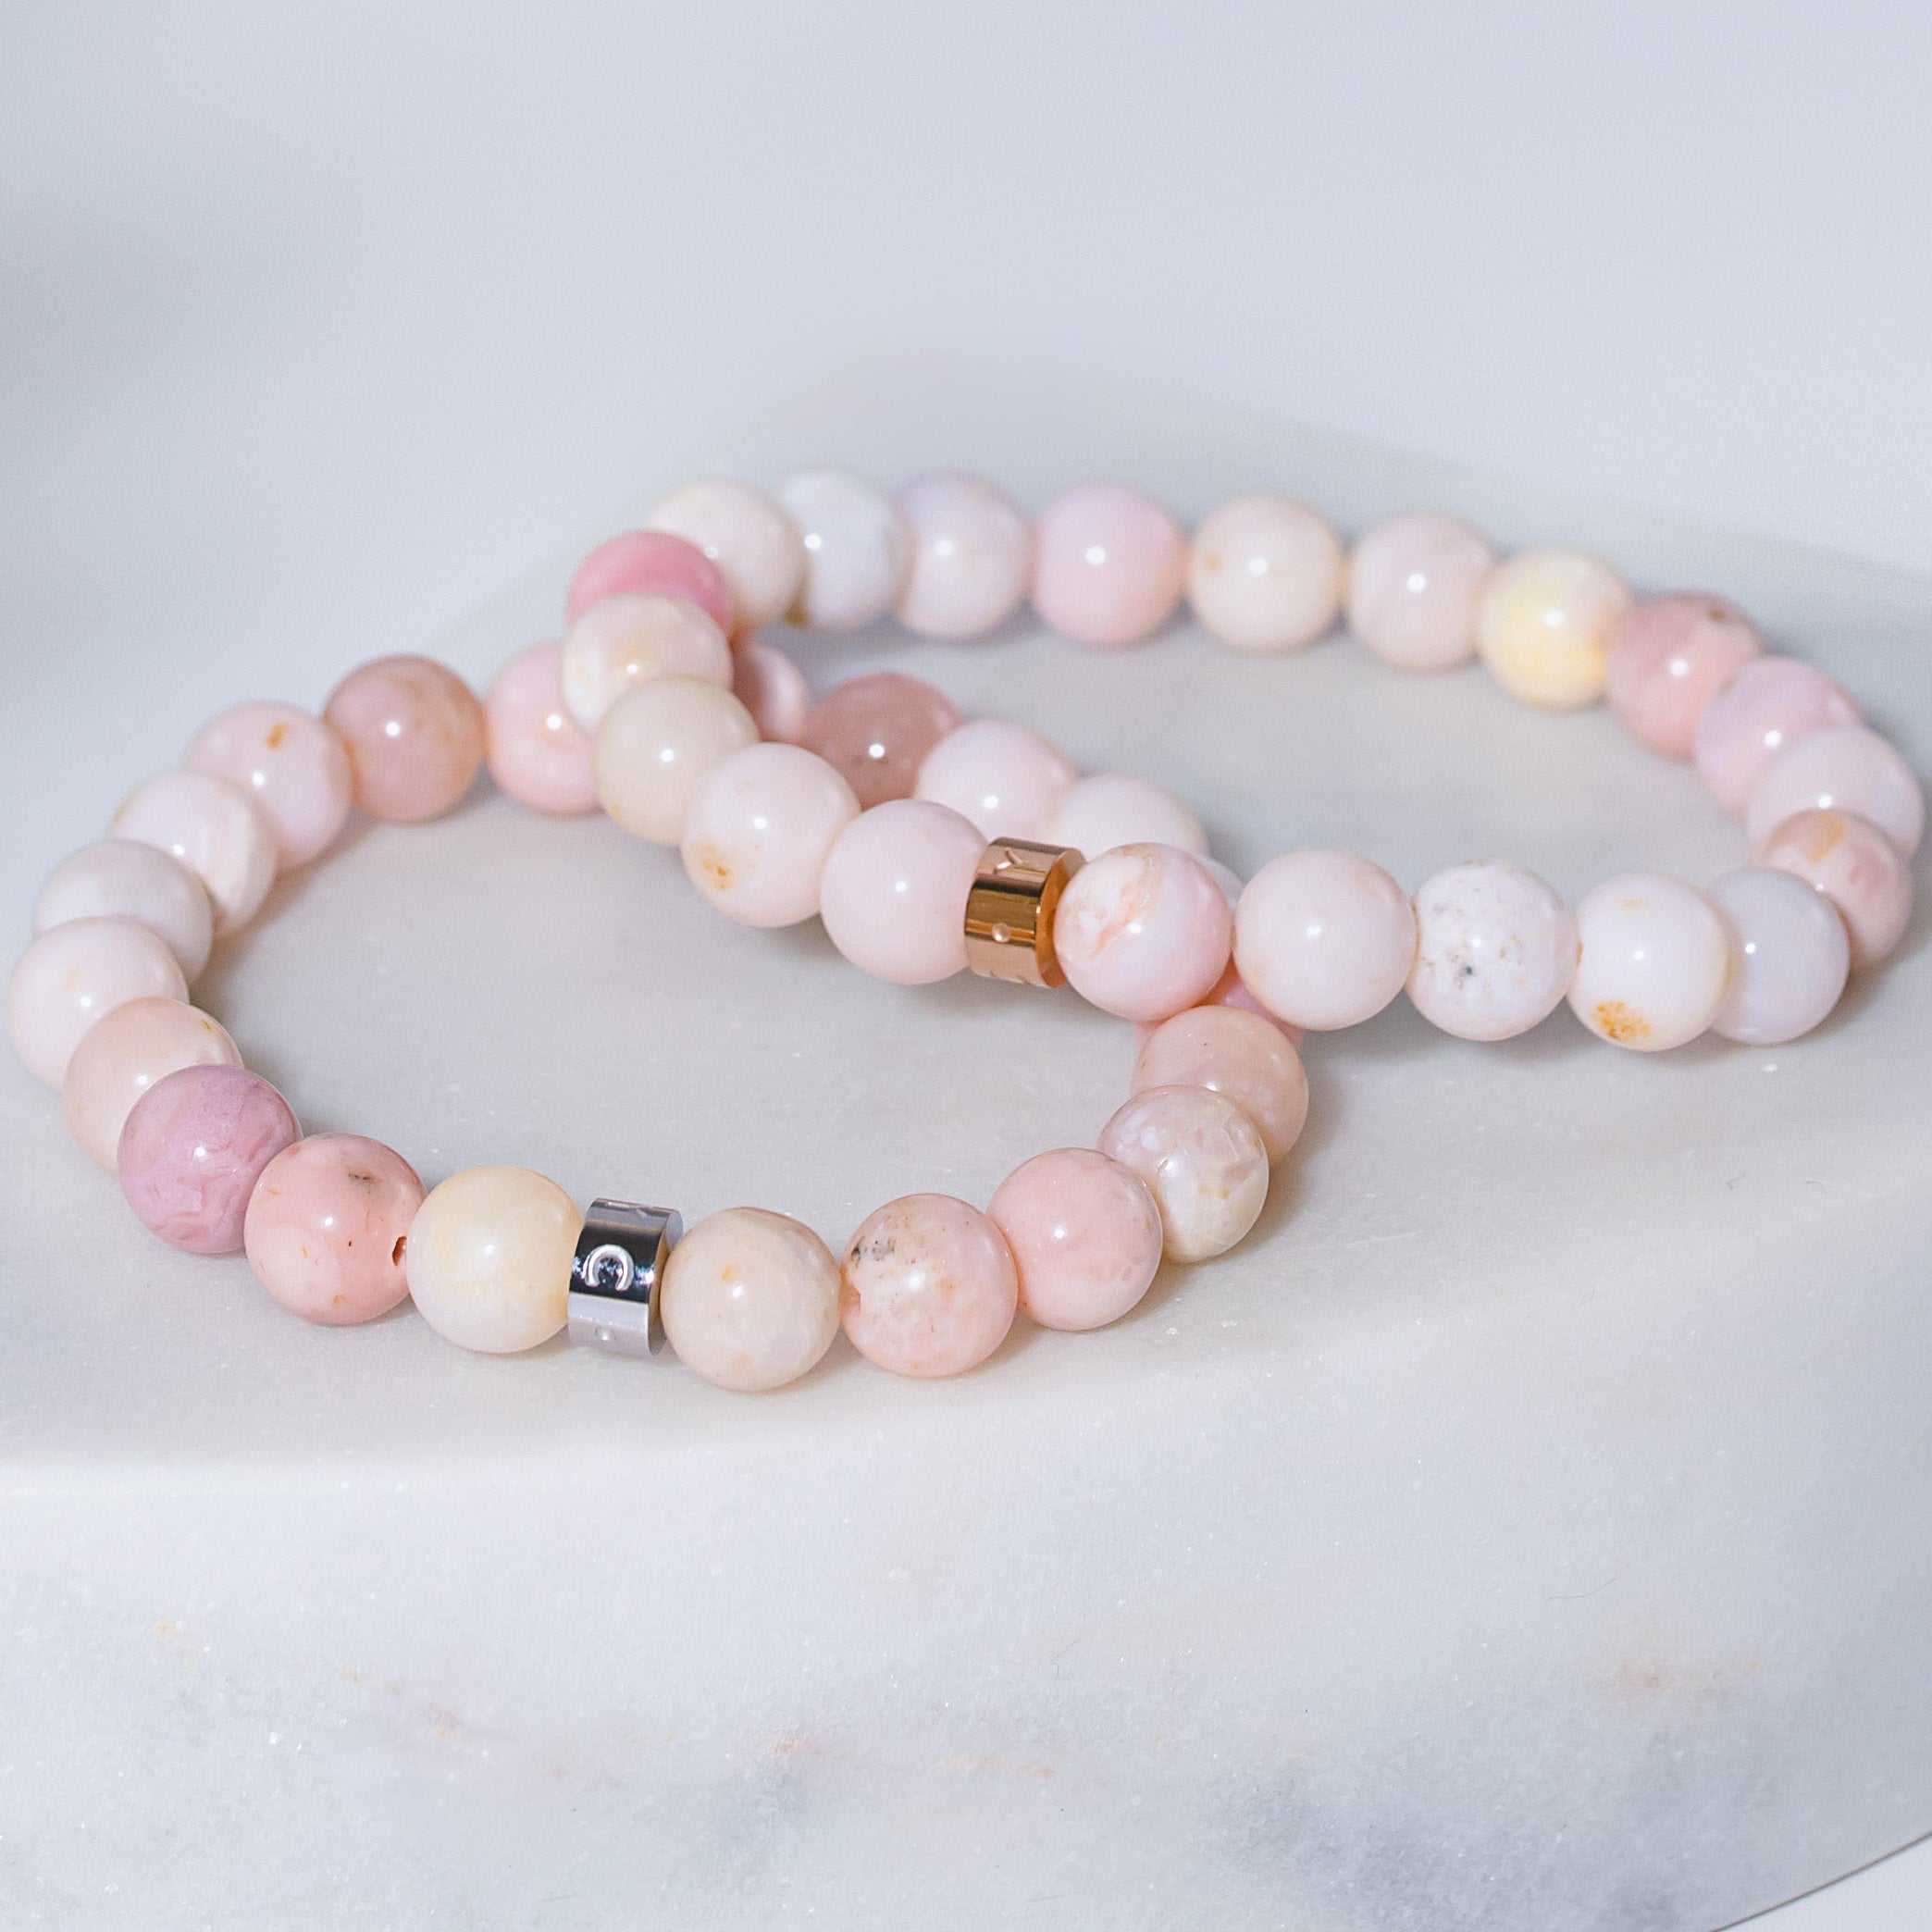 Natural Stone Gem Bracelet 7 inch Stretch-Pink Opal